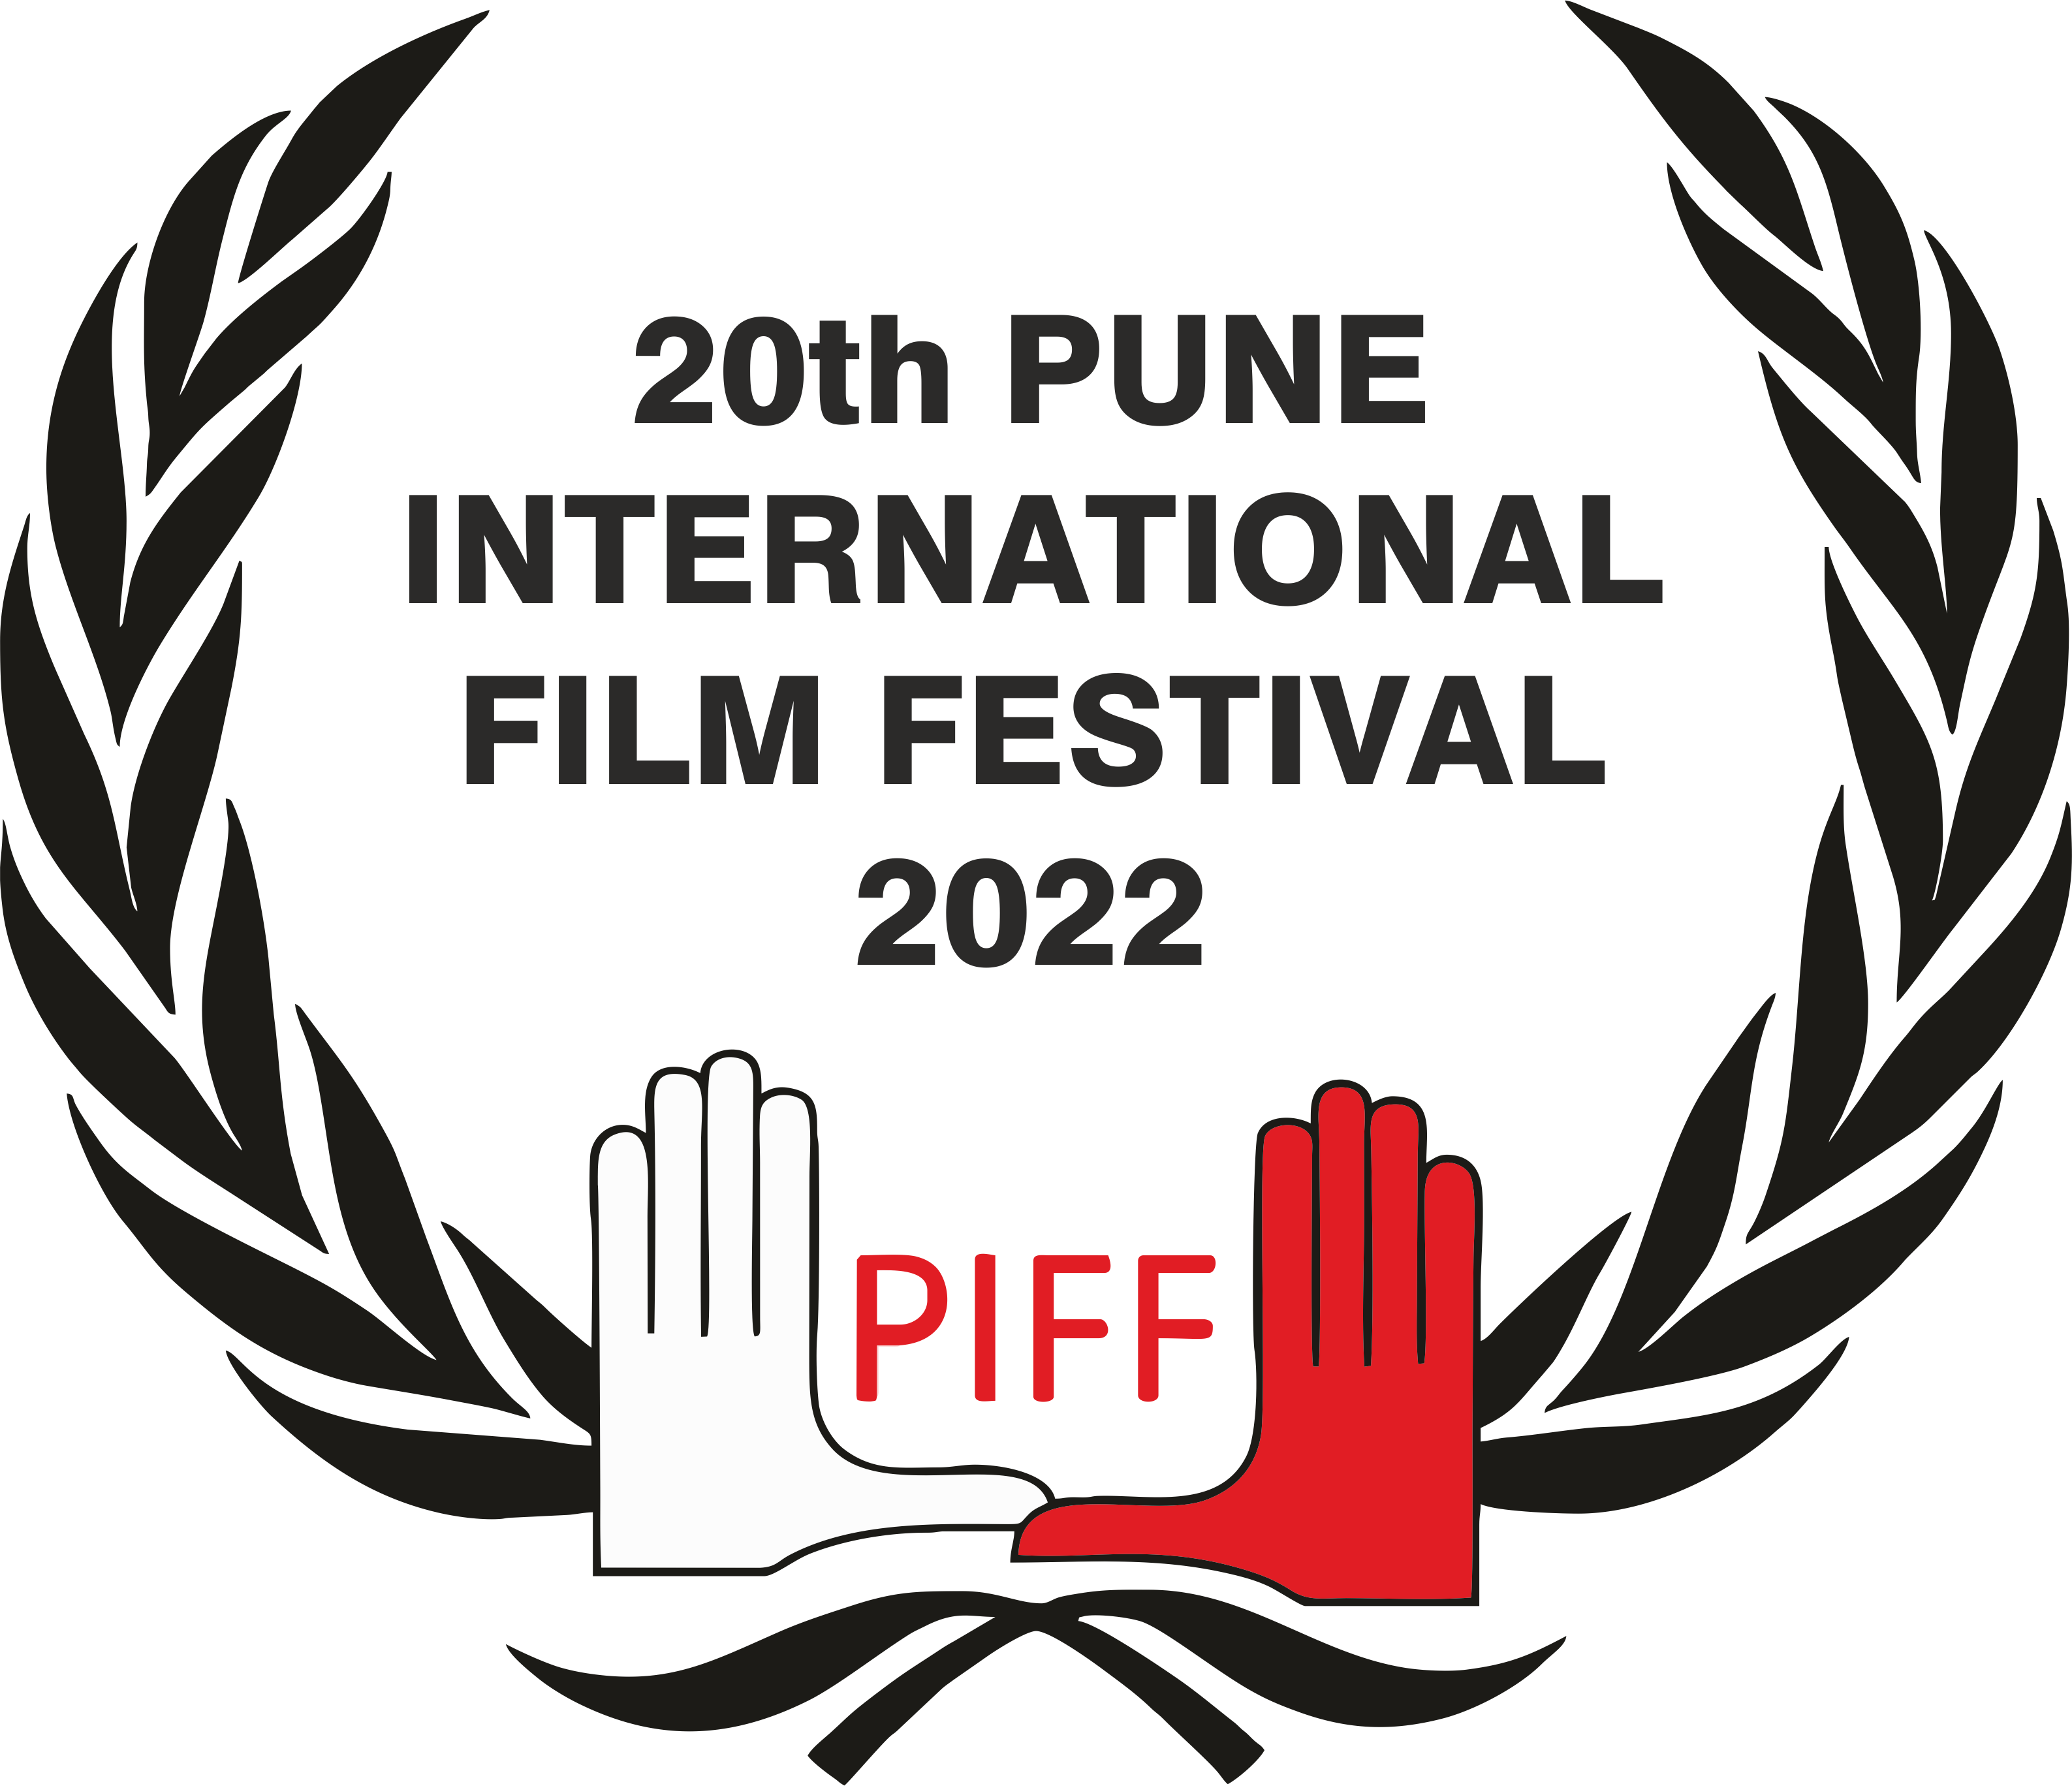 Pune International Film Festival - Competition